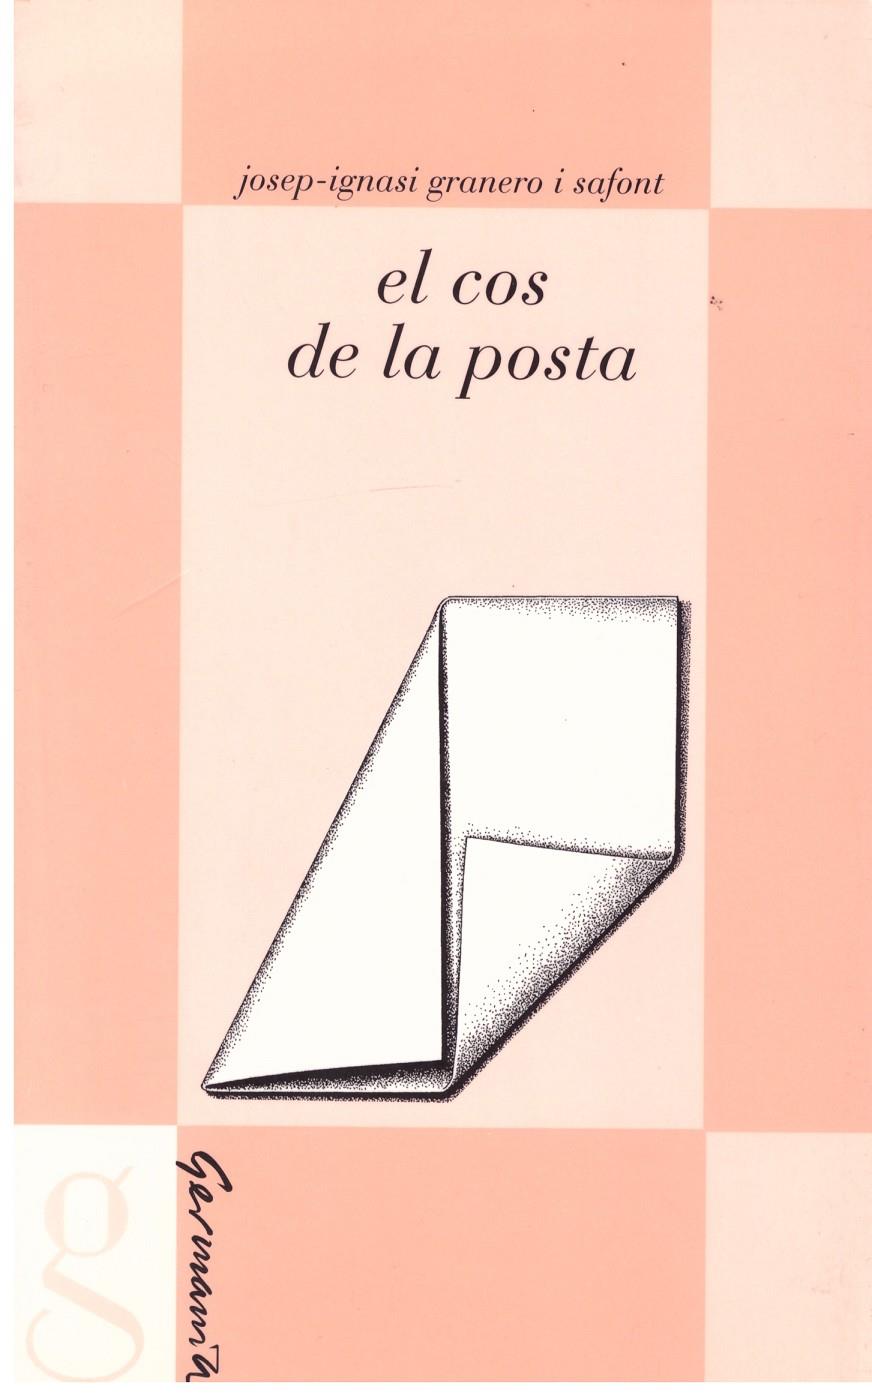 EL COS DE LA POSTA | 9999900024159 | Granero i Safont, Josep Ignasi. | Llibres de Companyia - Libros de segunda mano Barcelona